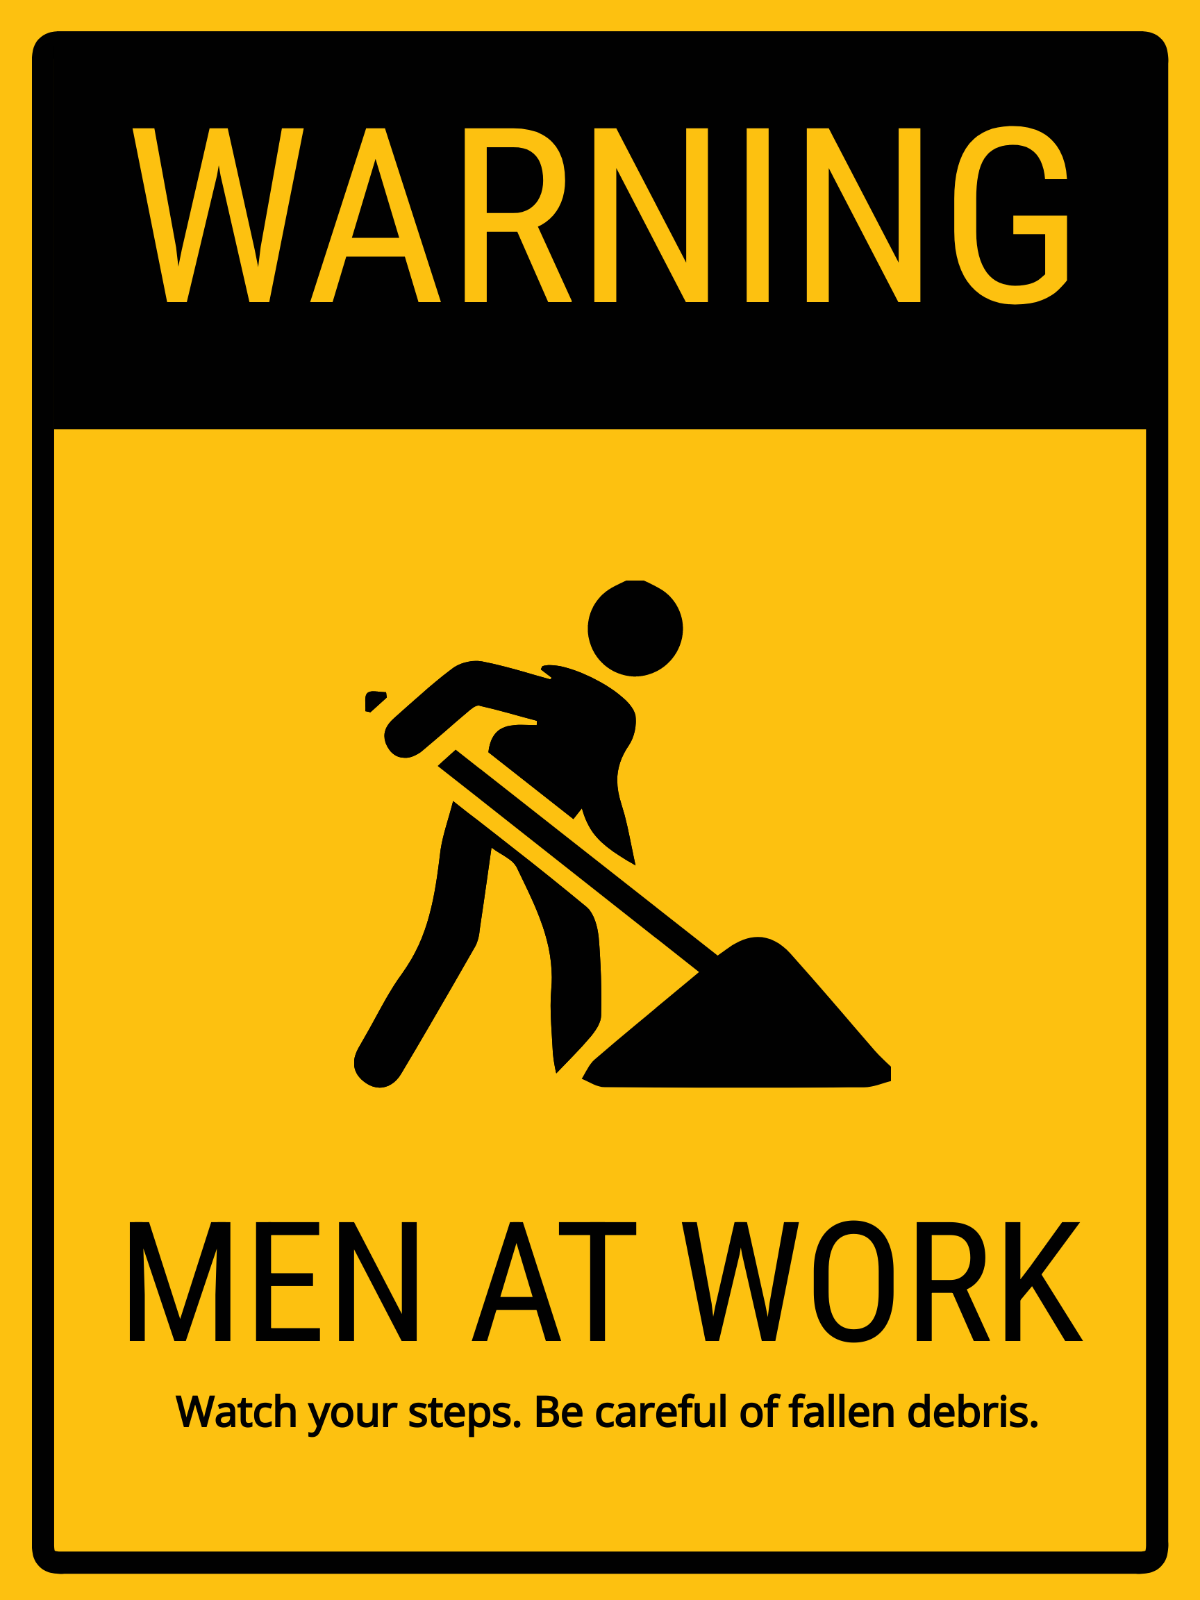 Warning Men at Work Sign Template